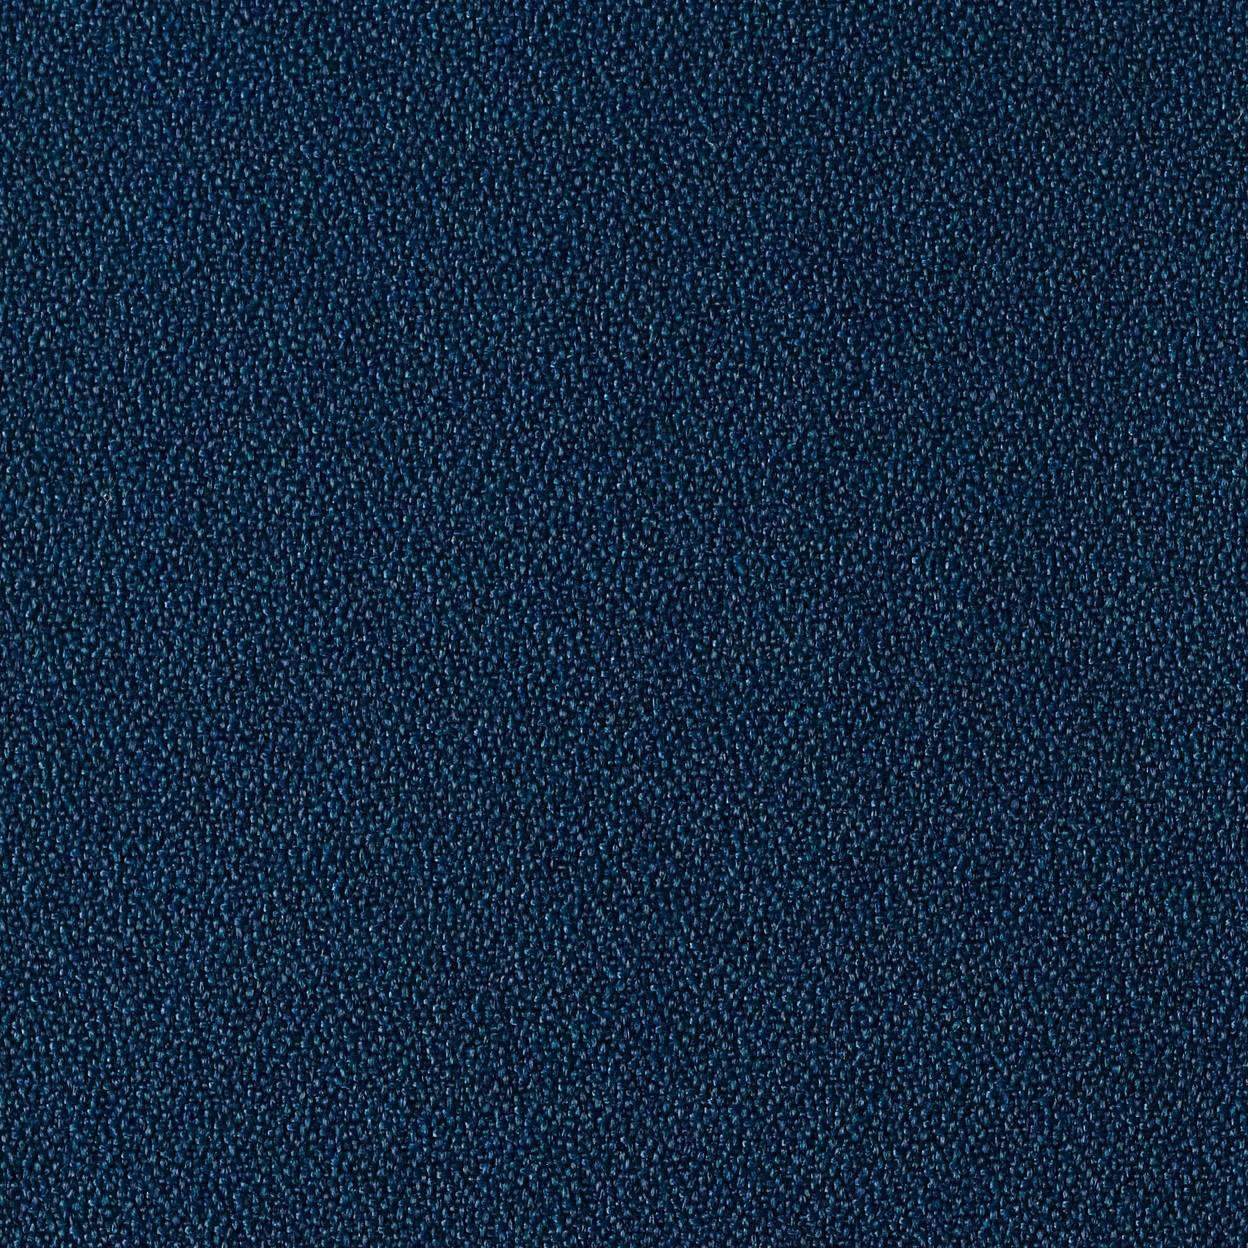 Cadet Crepe Textiles - Materials - Herman Miller